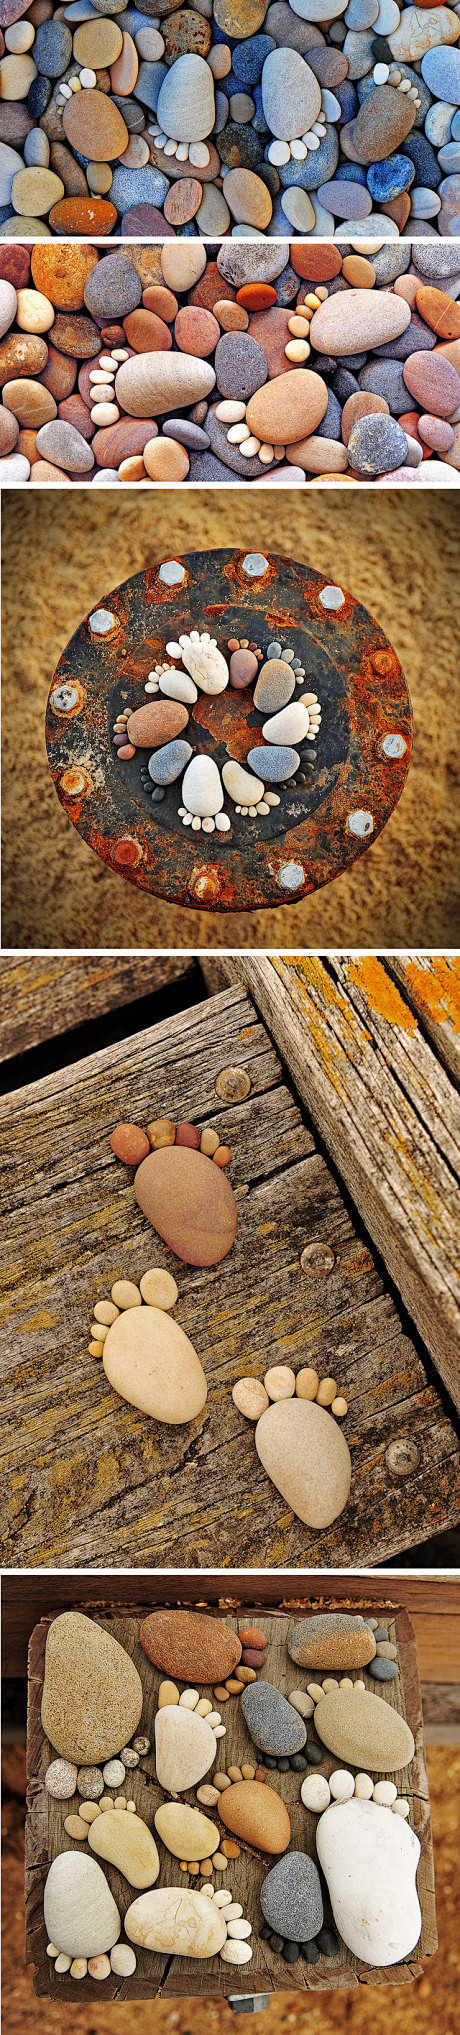 《石头脚印》是苏格兰摄影师Iain Bl...